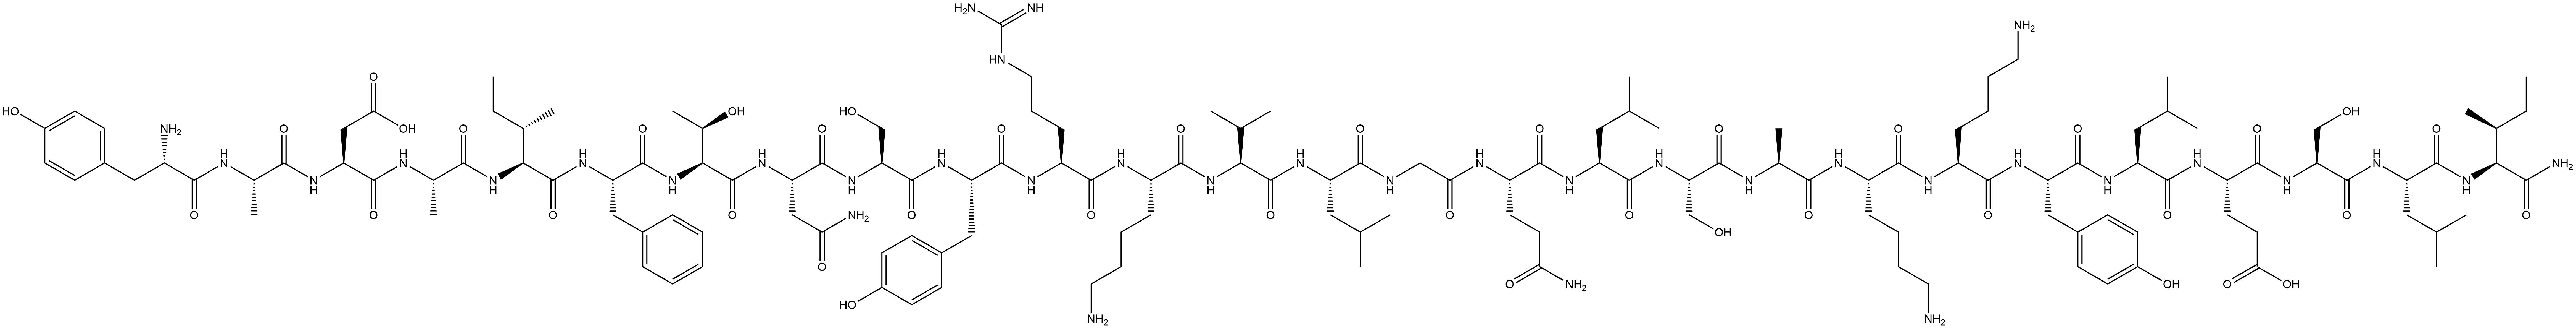 GRF-PHI heptacosapeptide amide|